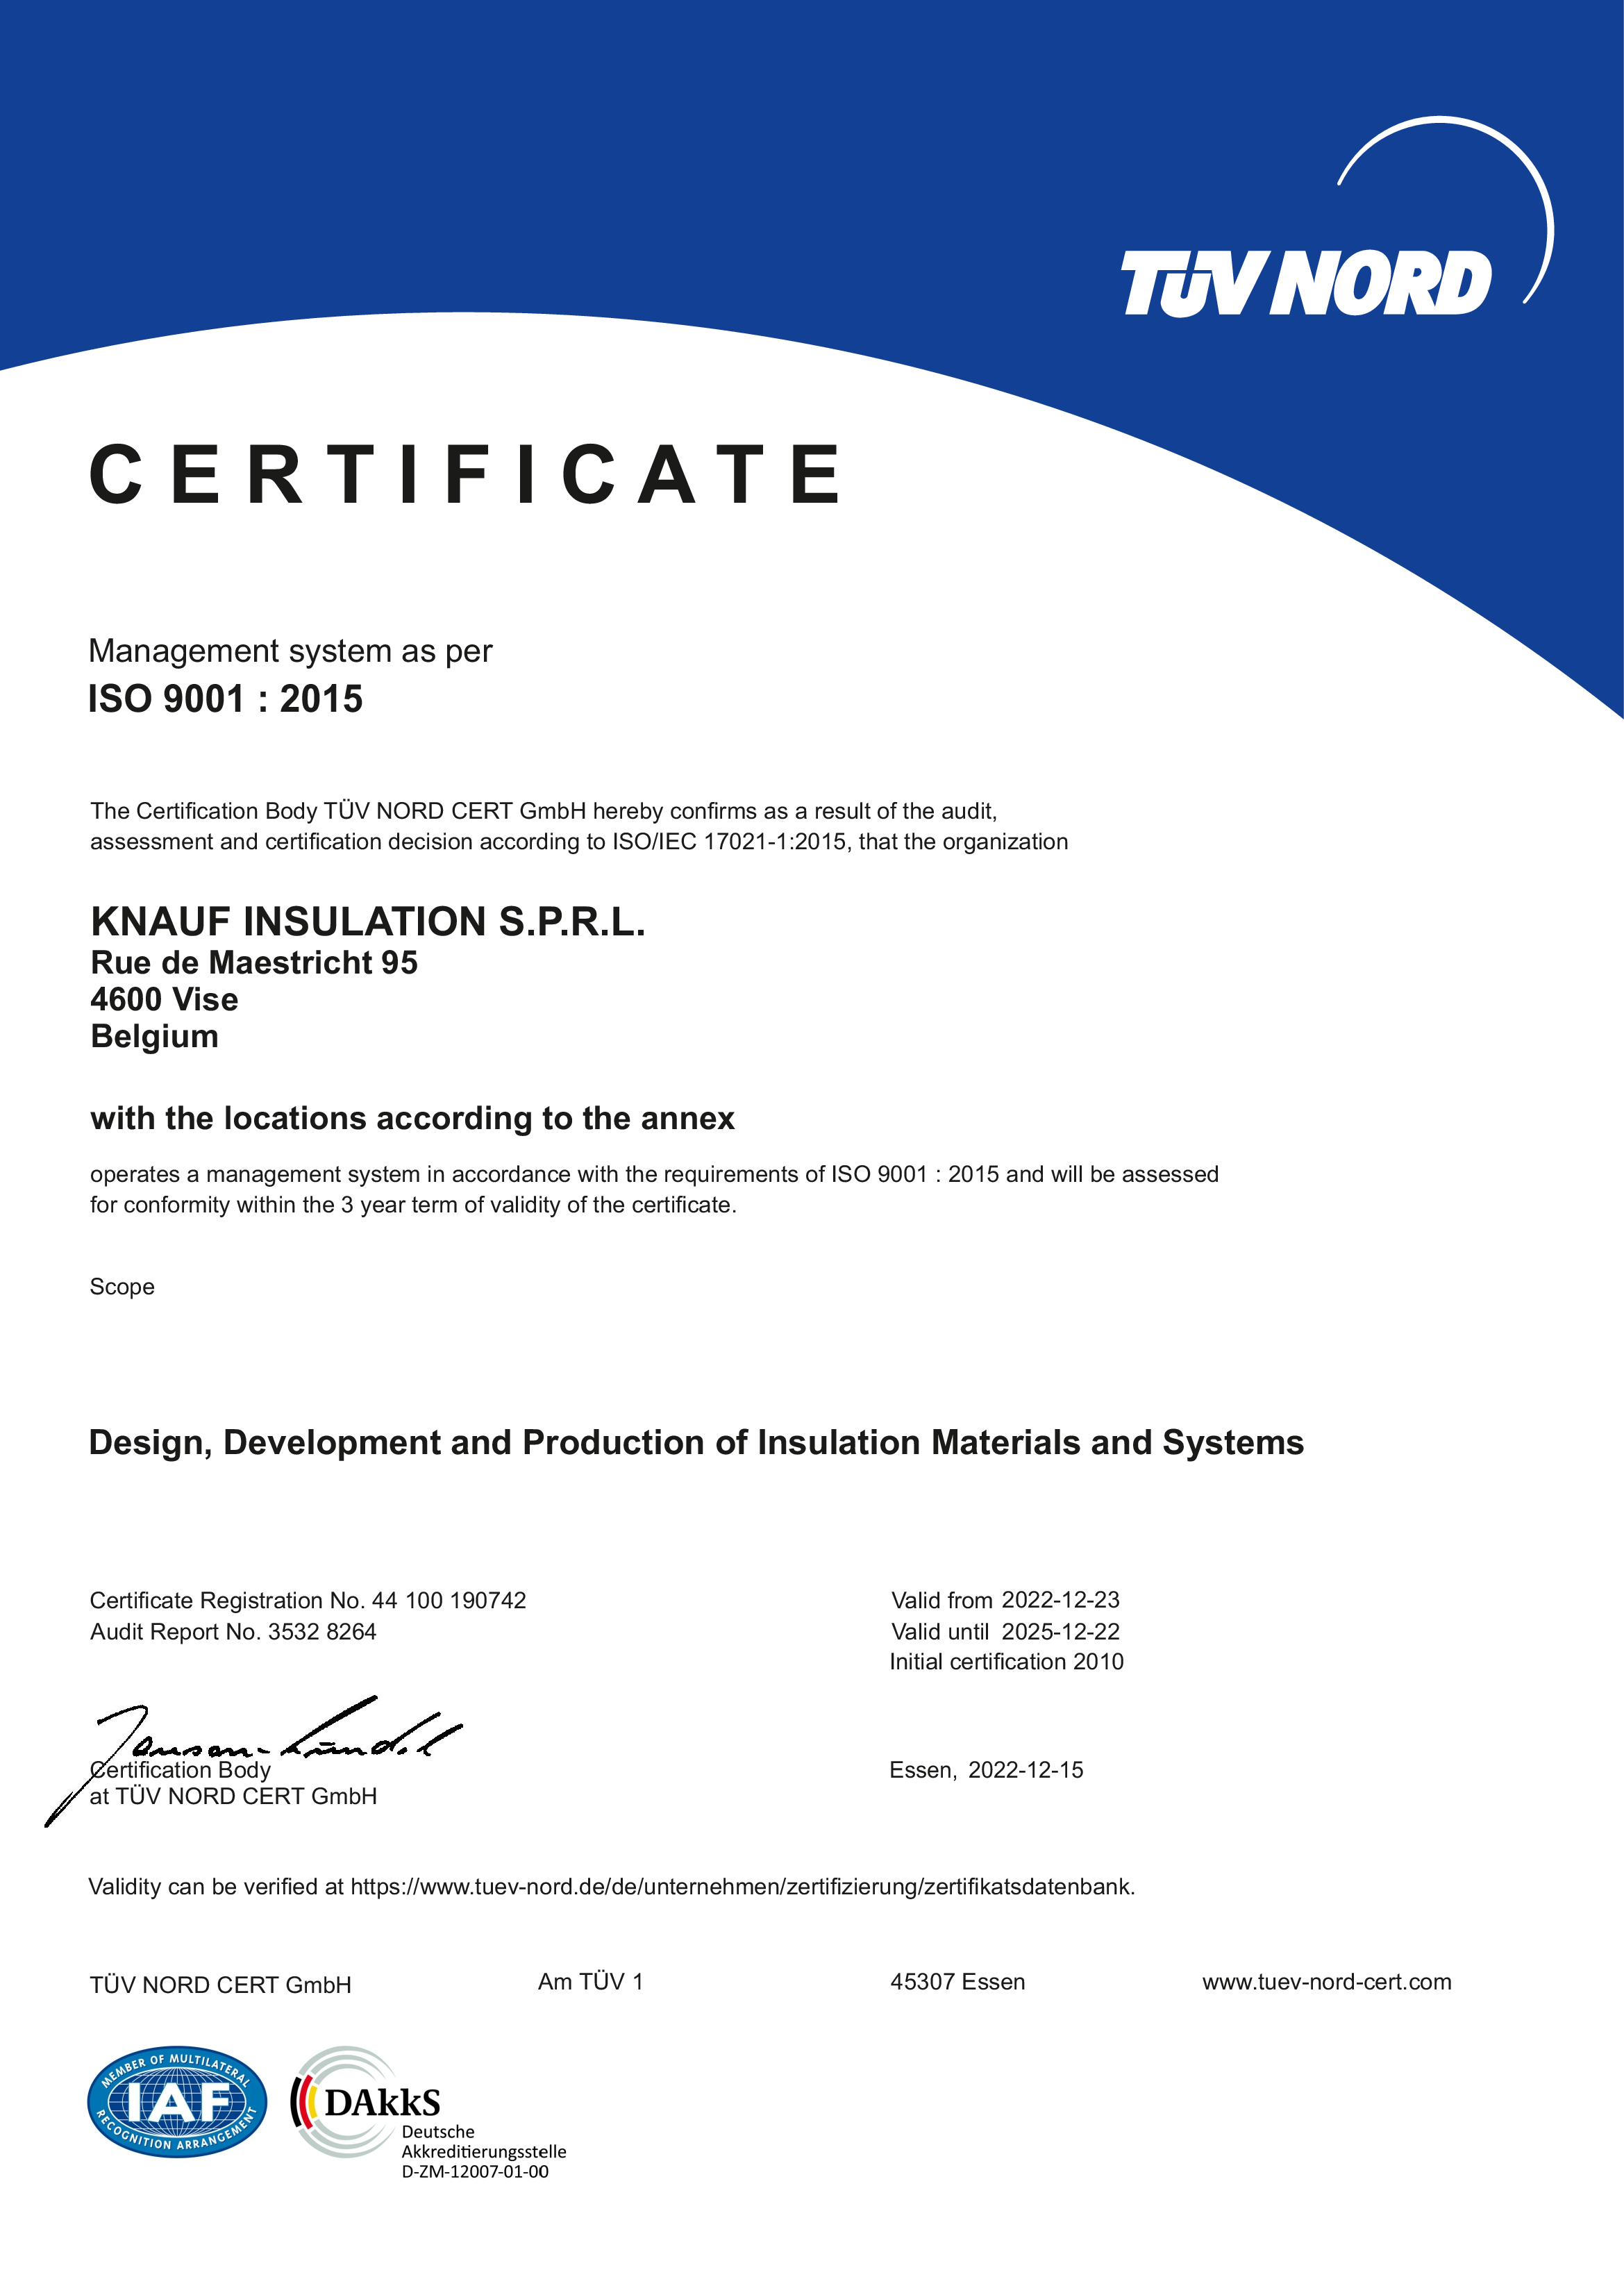 Knauf Insulation - TÜV NORD ISO 9001